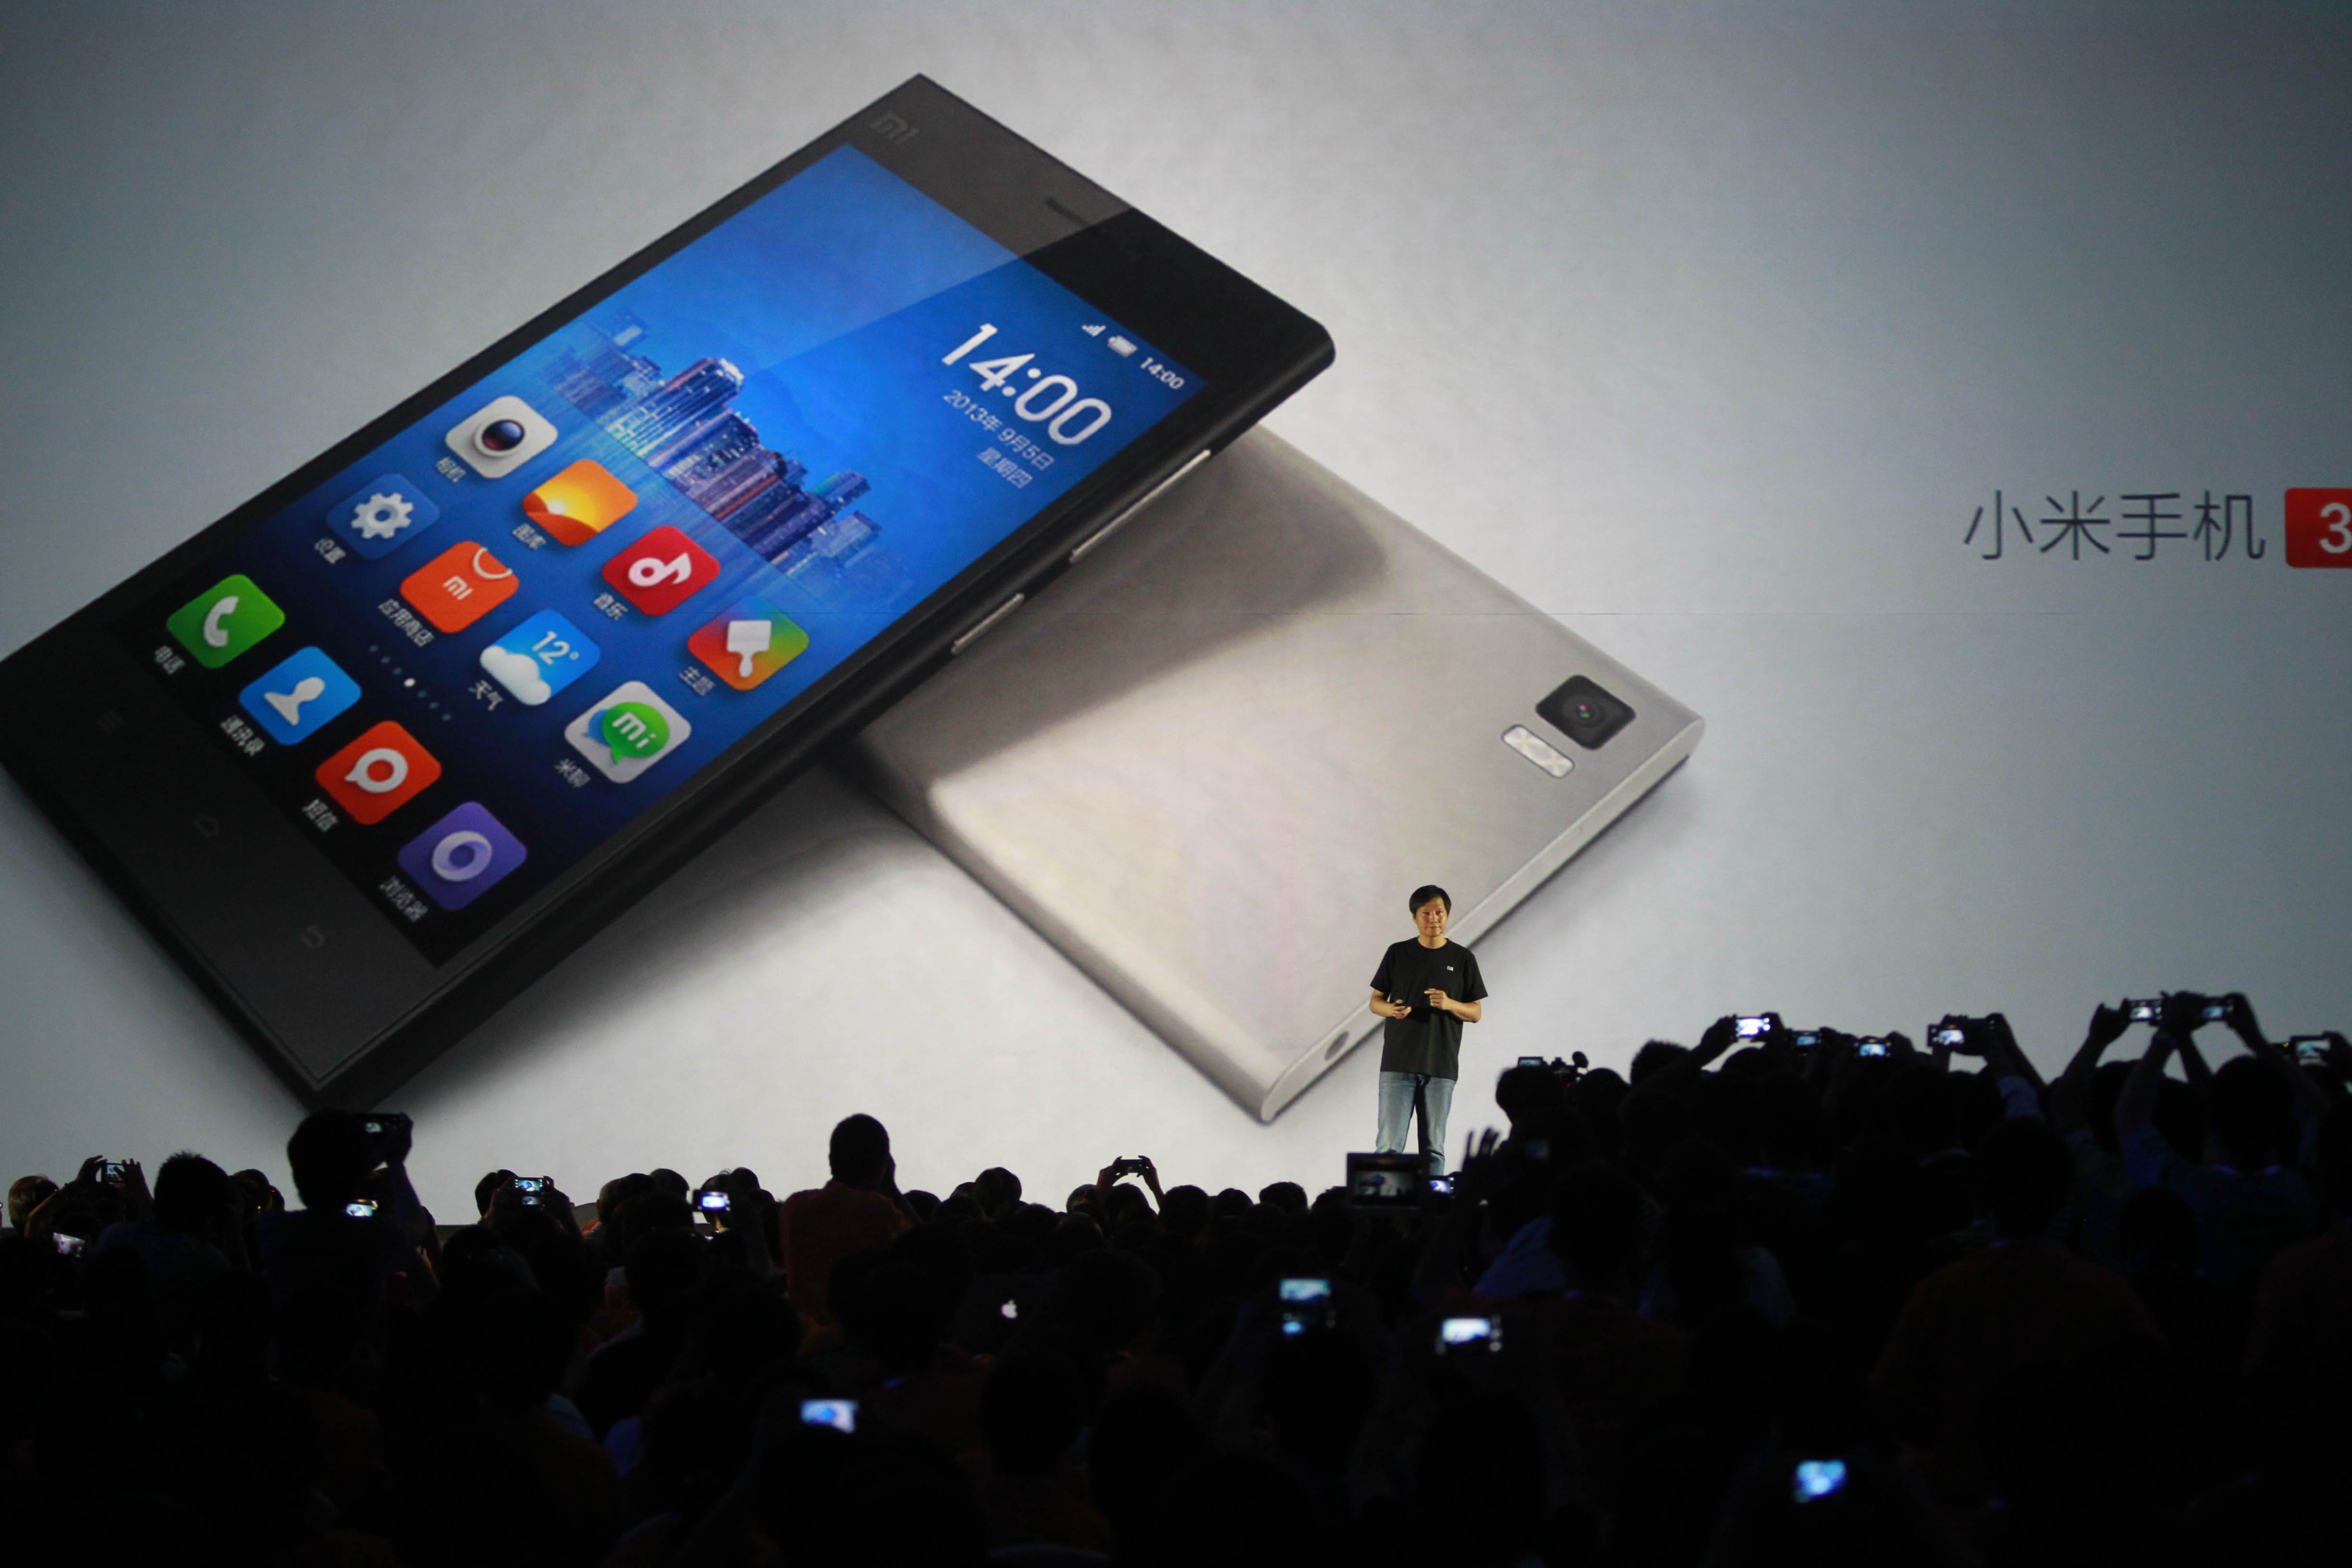 Lei Jun, founder of Xiaomi, introduces the new Xiaomi 3 smartphone and Xiaomi TV in Beijing. Photo: Simon Song